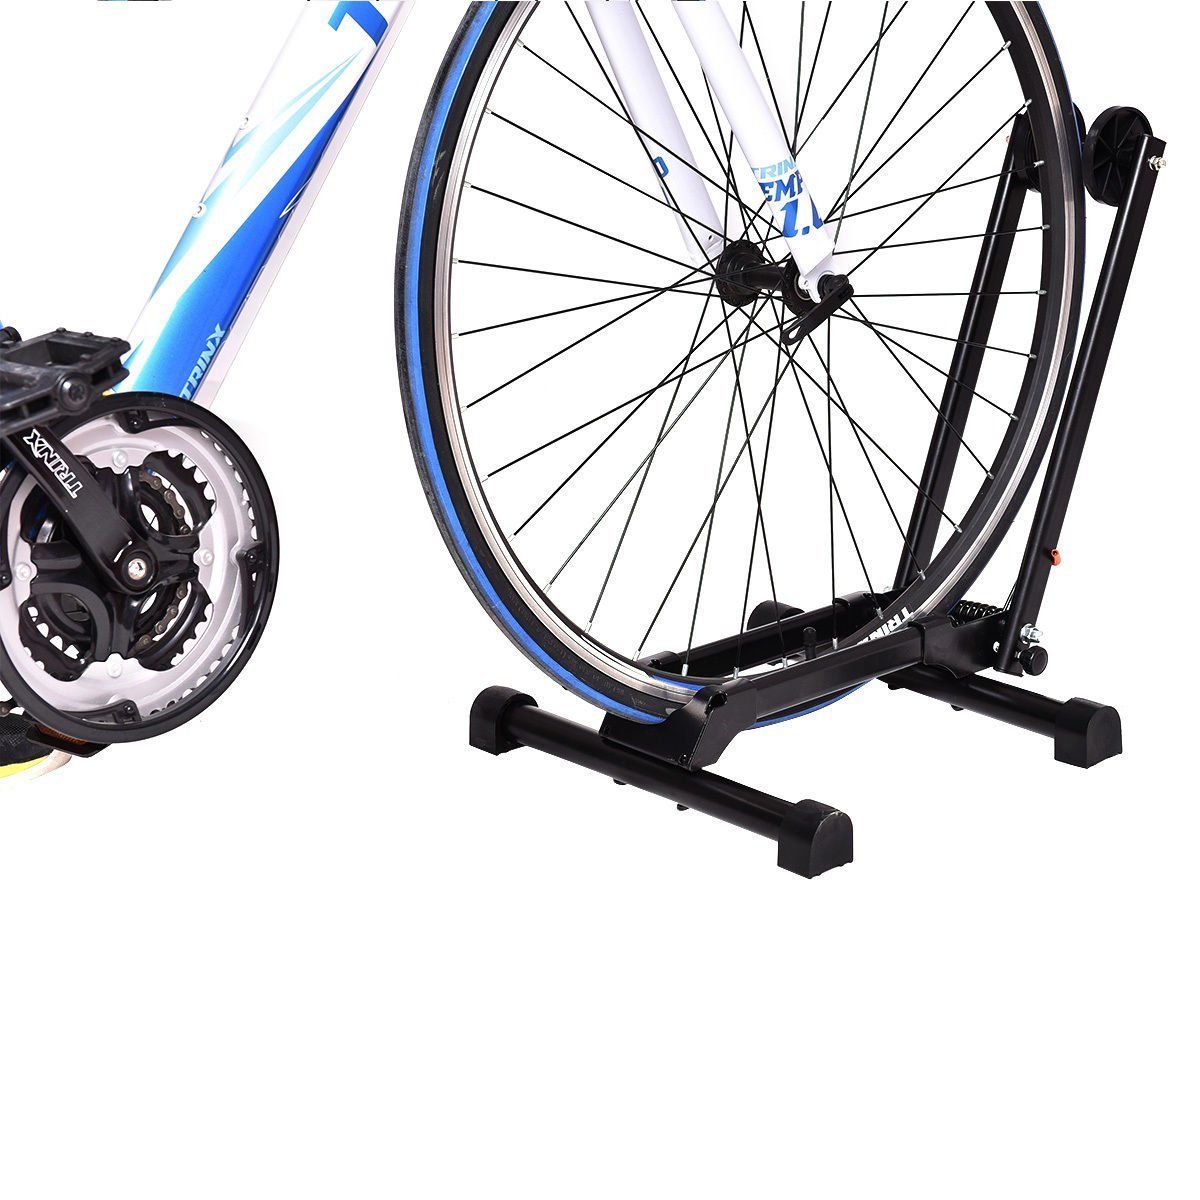 Goplus Black Steel Bike Stand with Folding Design - Holds 1 Bike, Easy ...